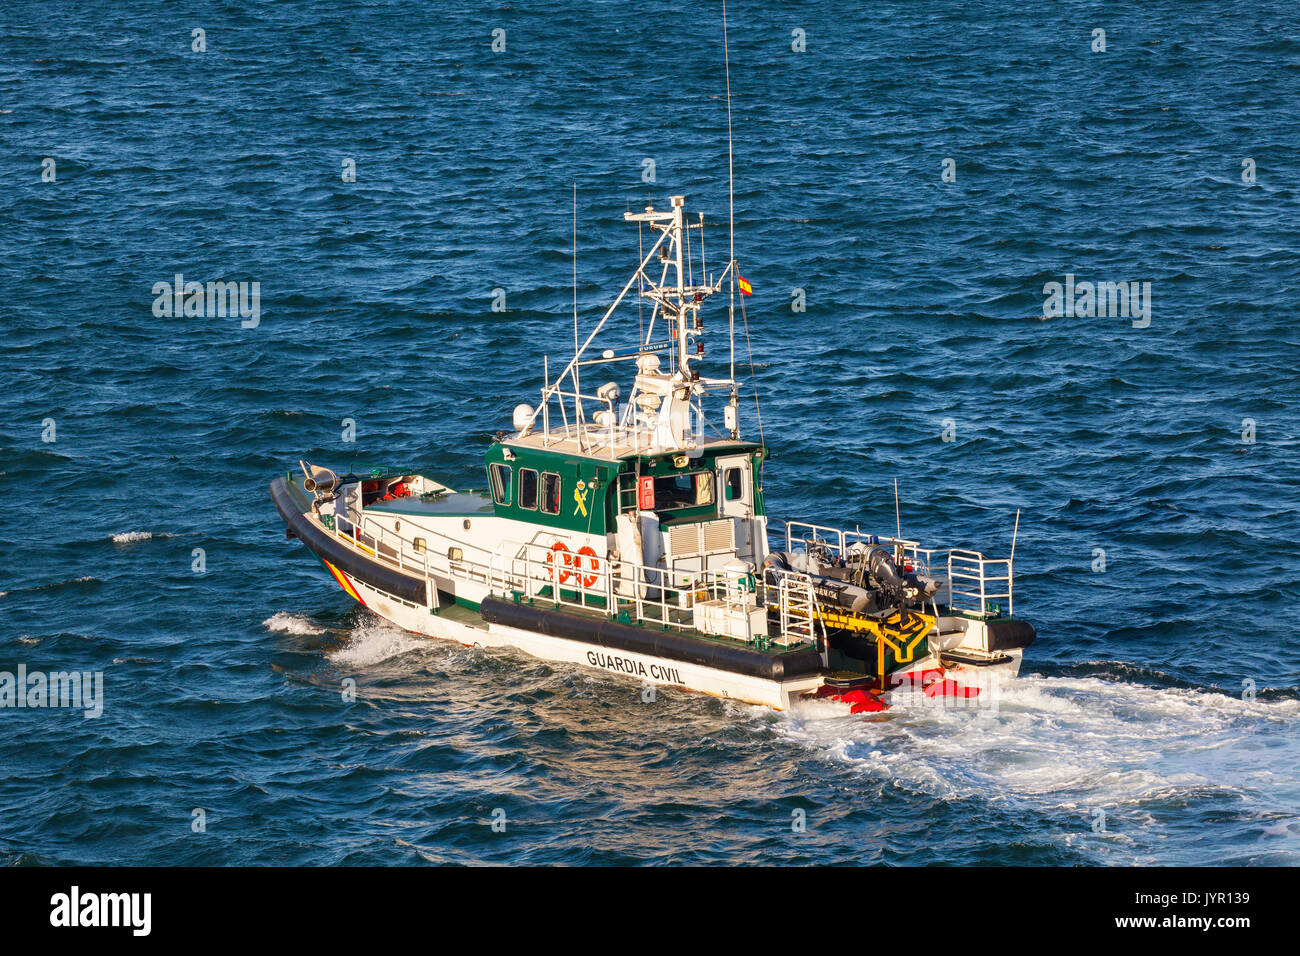 Guardia civil patrol boat in the harbour at the port of Santander Spain Stock Photo